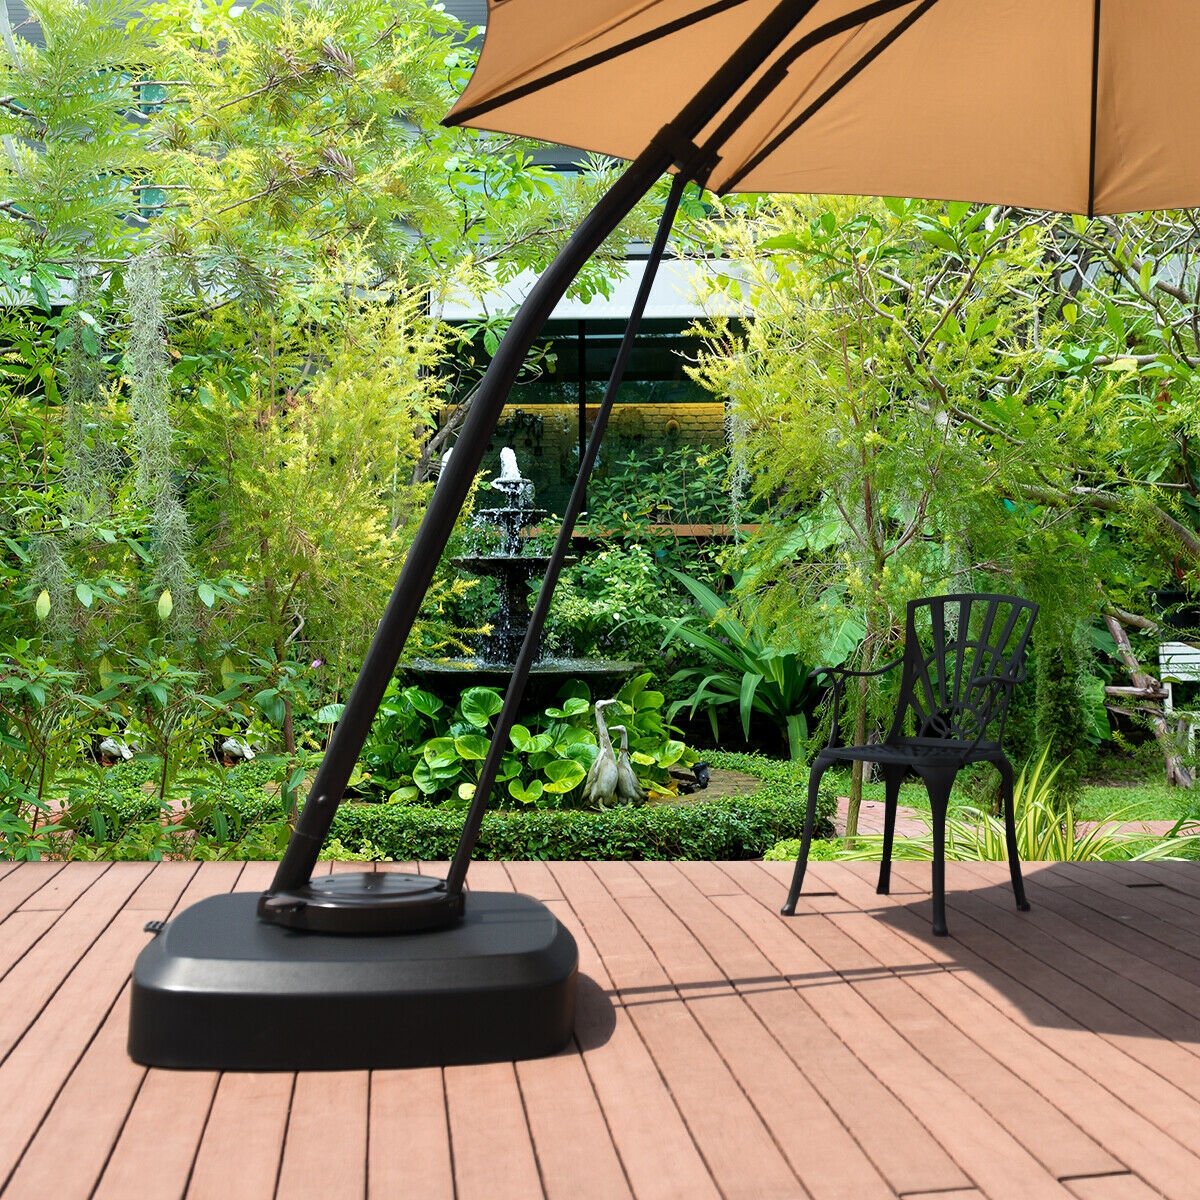 Patio Cantilever Offset Umbrella Base with Wheels for Garden Poolside Deck, Black - Gallery Canada